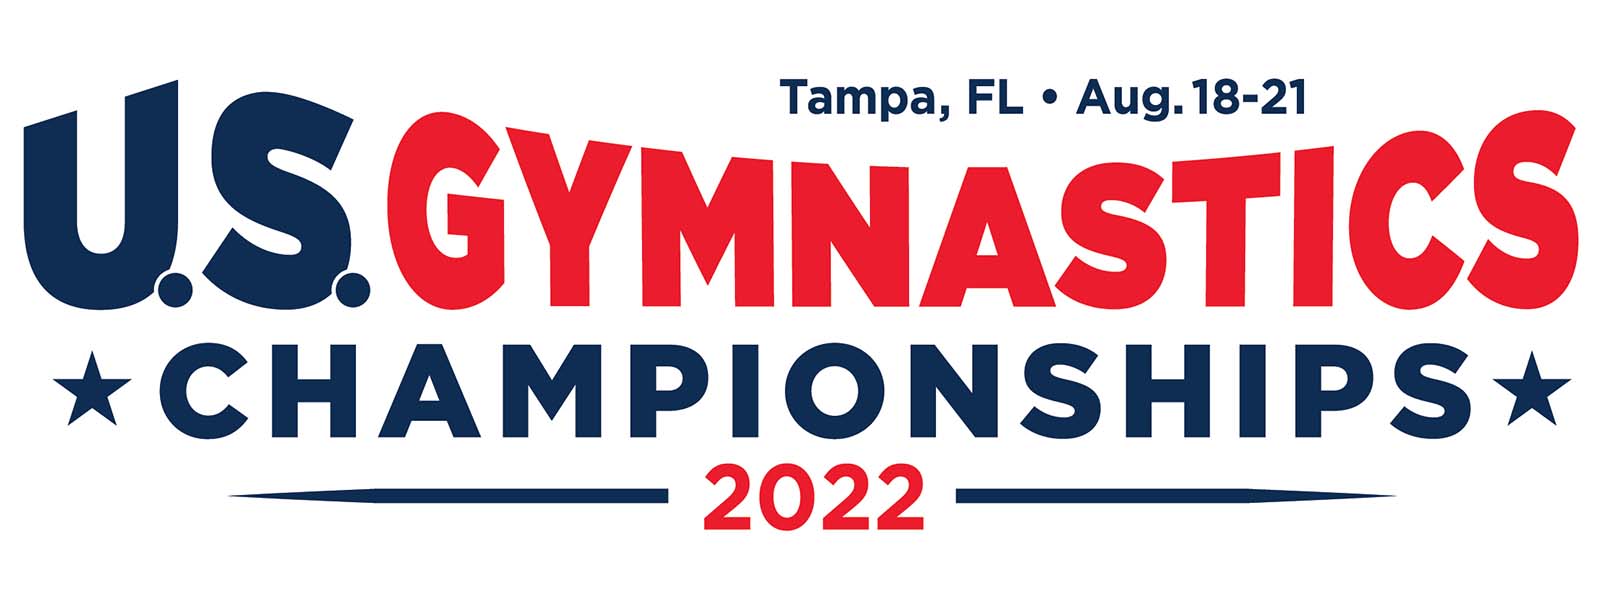 2022 U.S. Gymnastics Championships